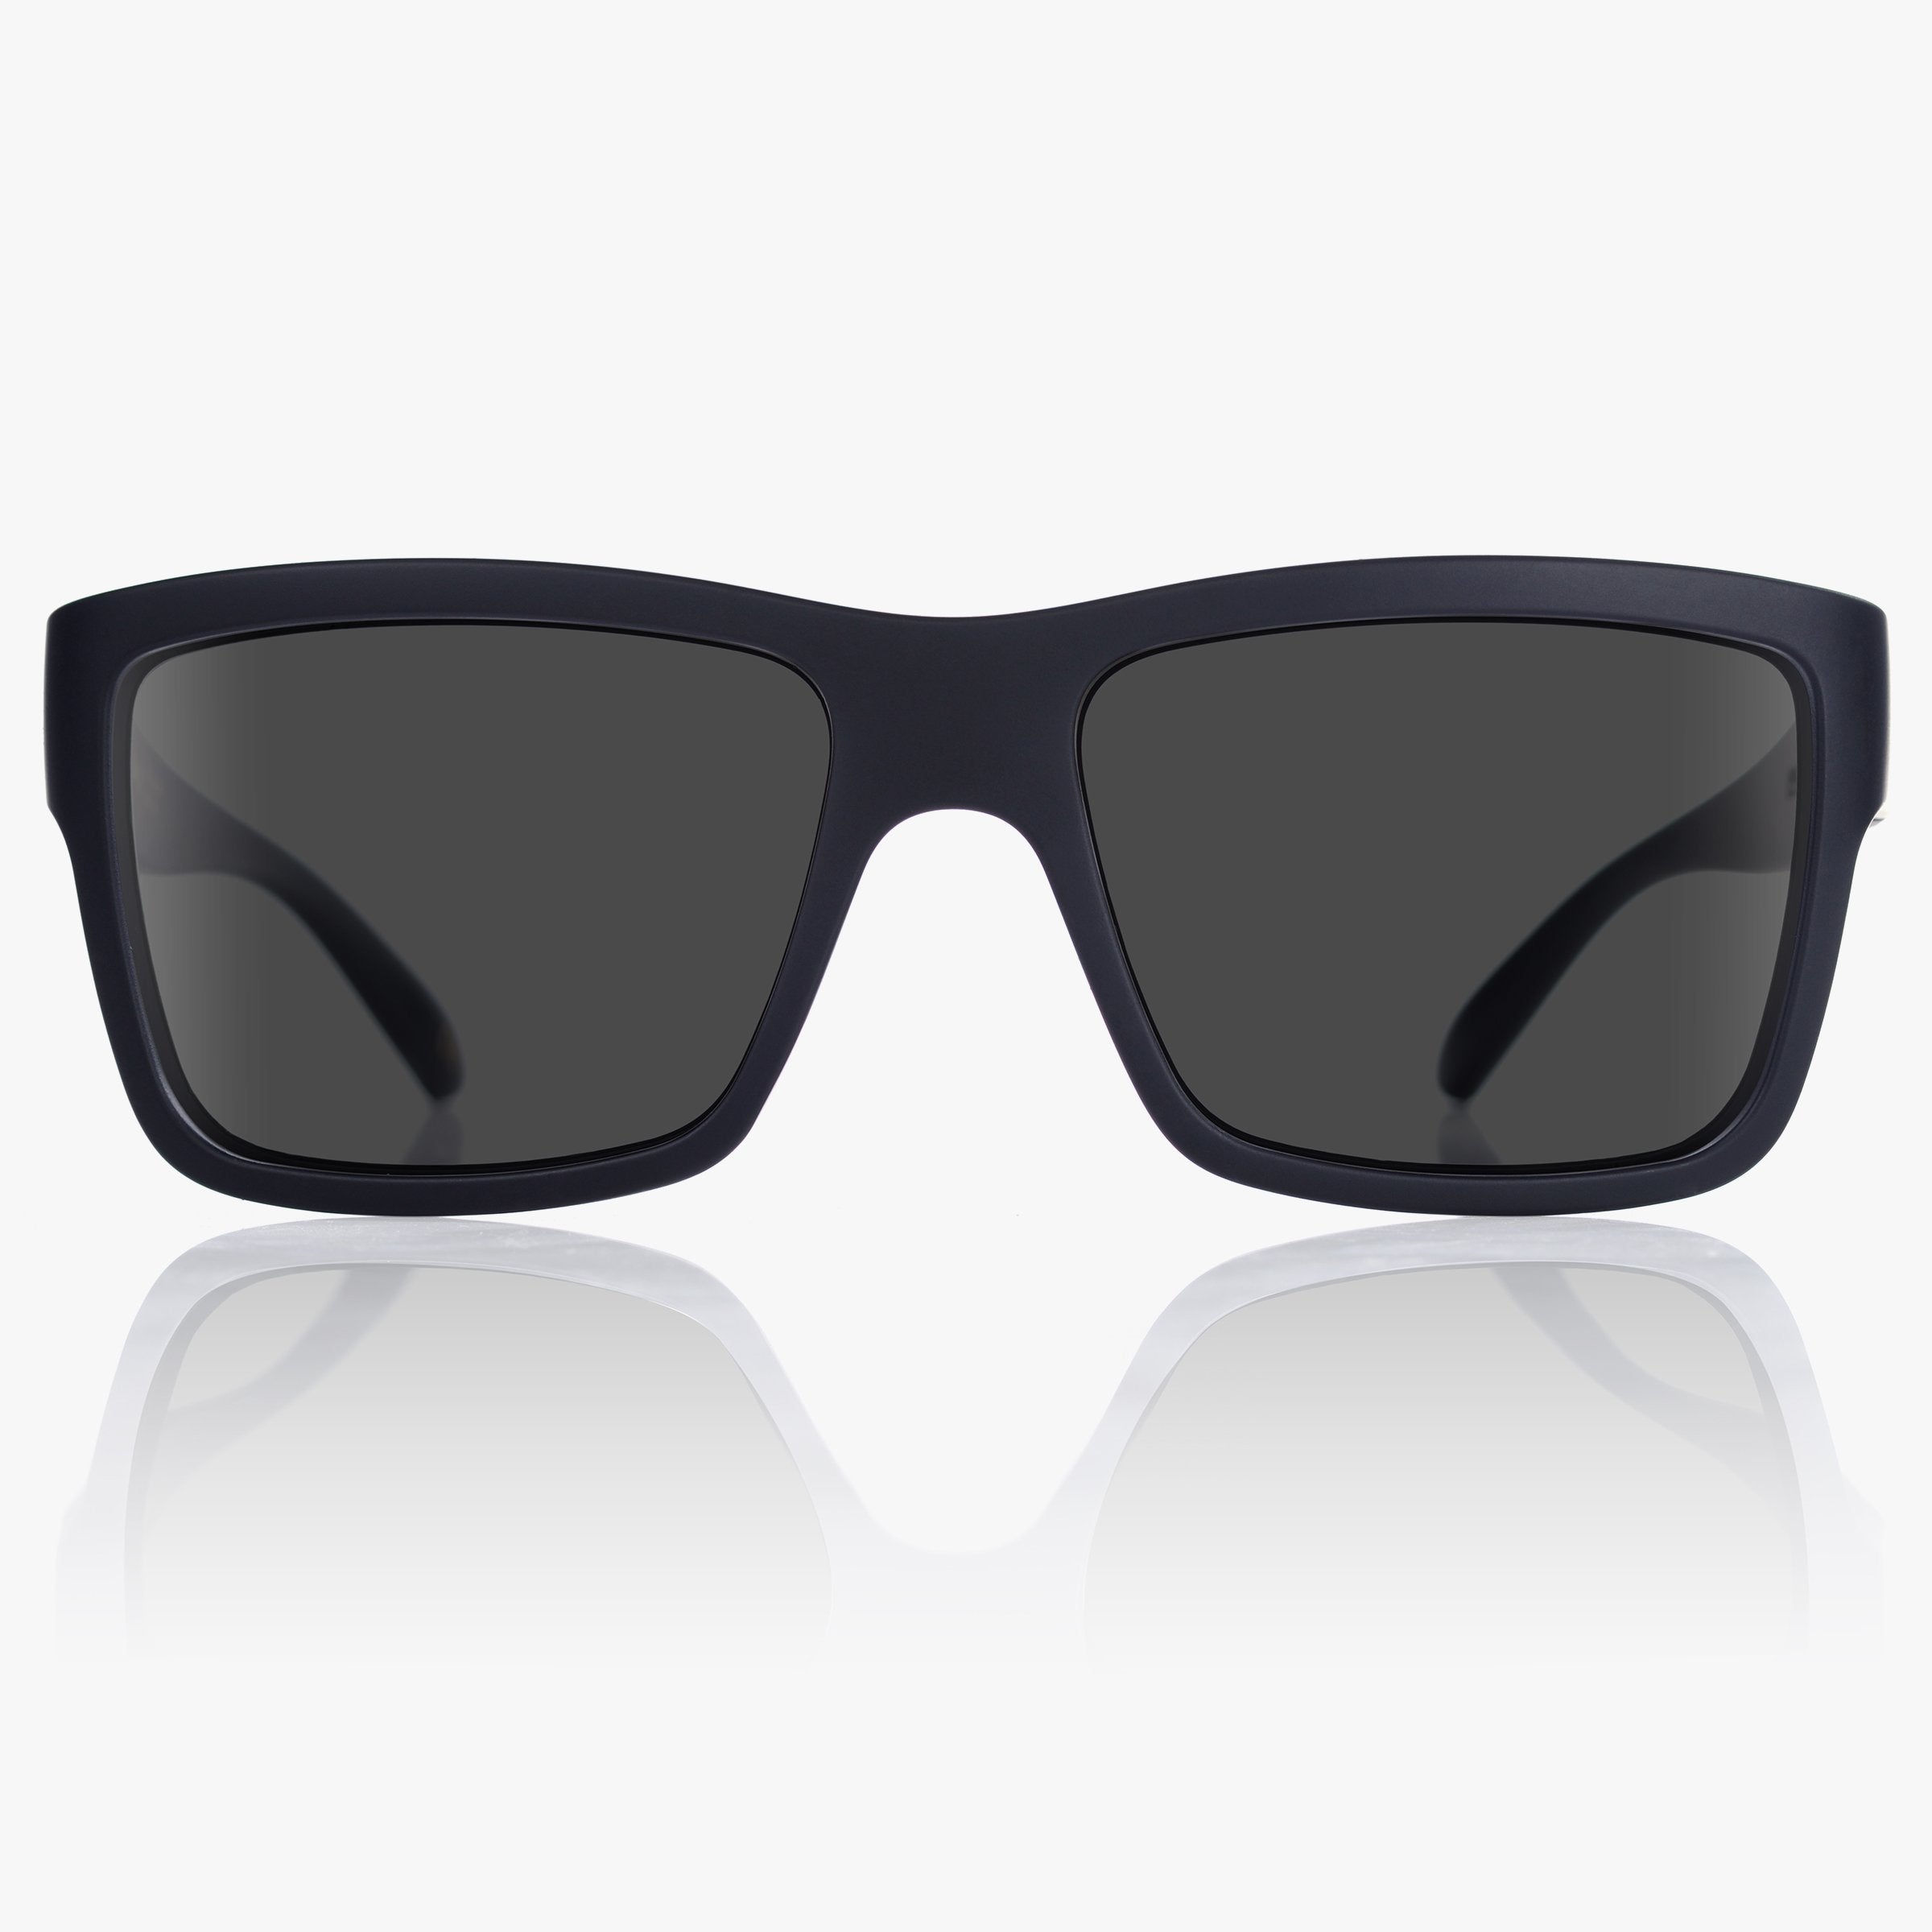 Piston XL Polarized Sunglasses for Men | Oversized XL| Madson – Madson ...